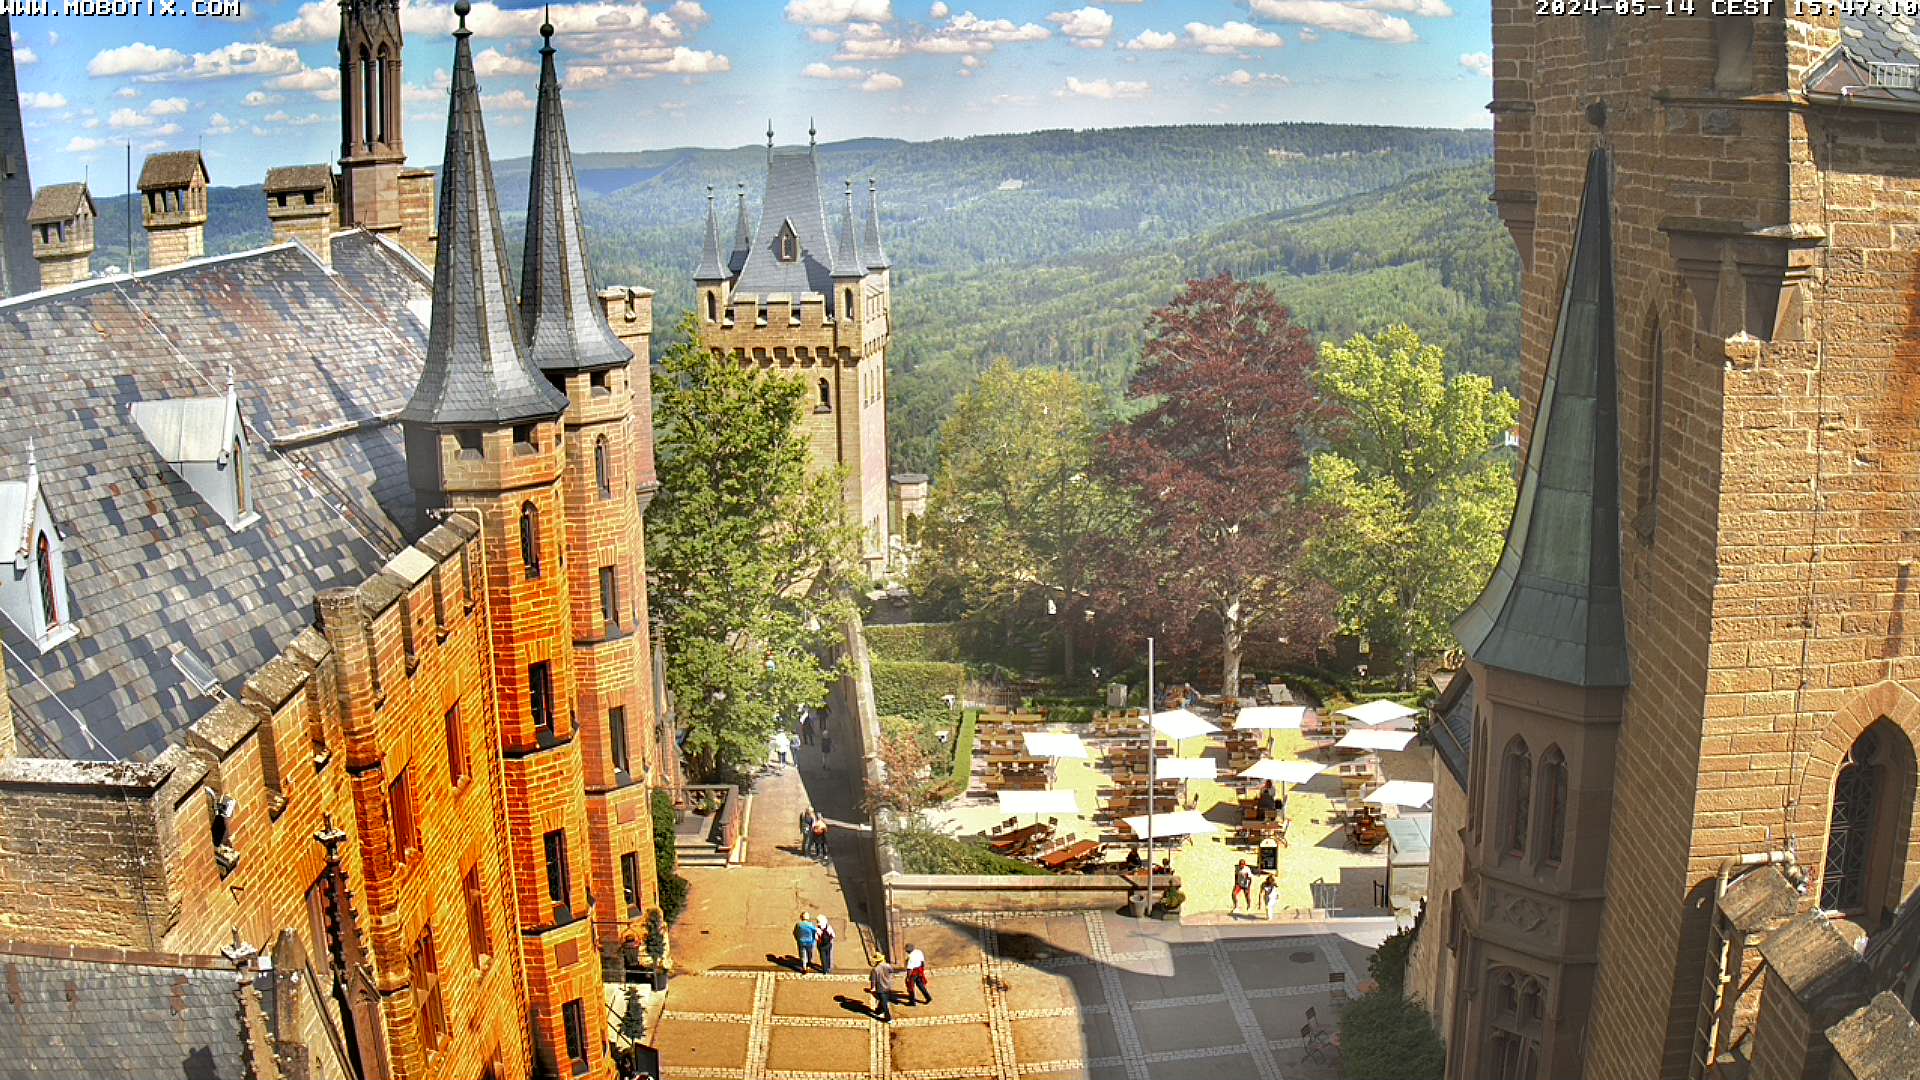 Burg Hohenzollern So. 15:50